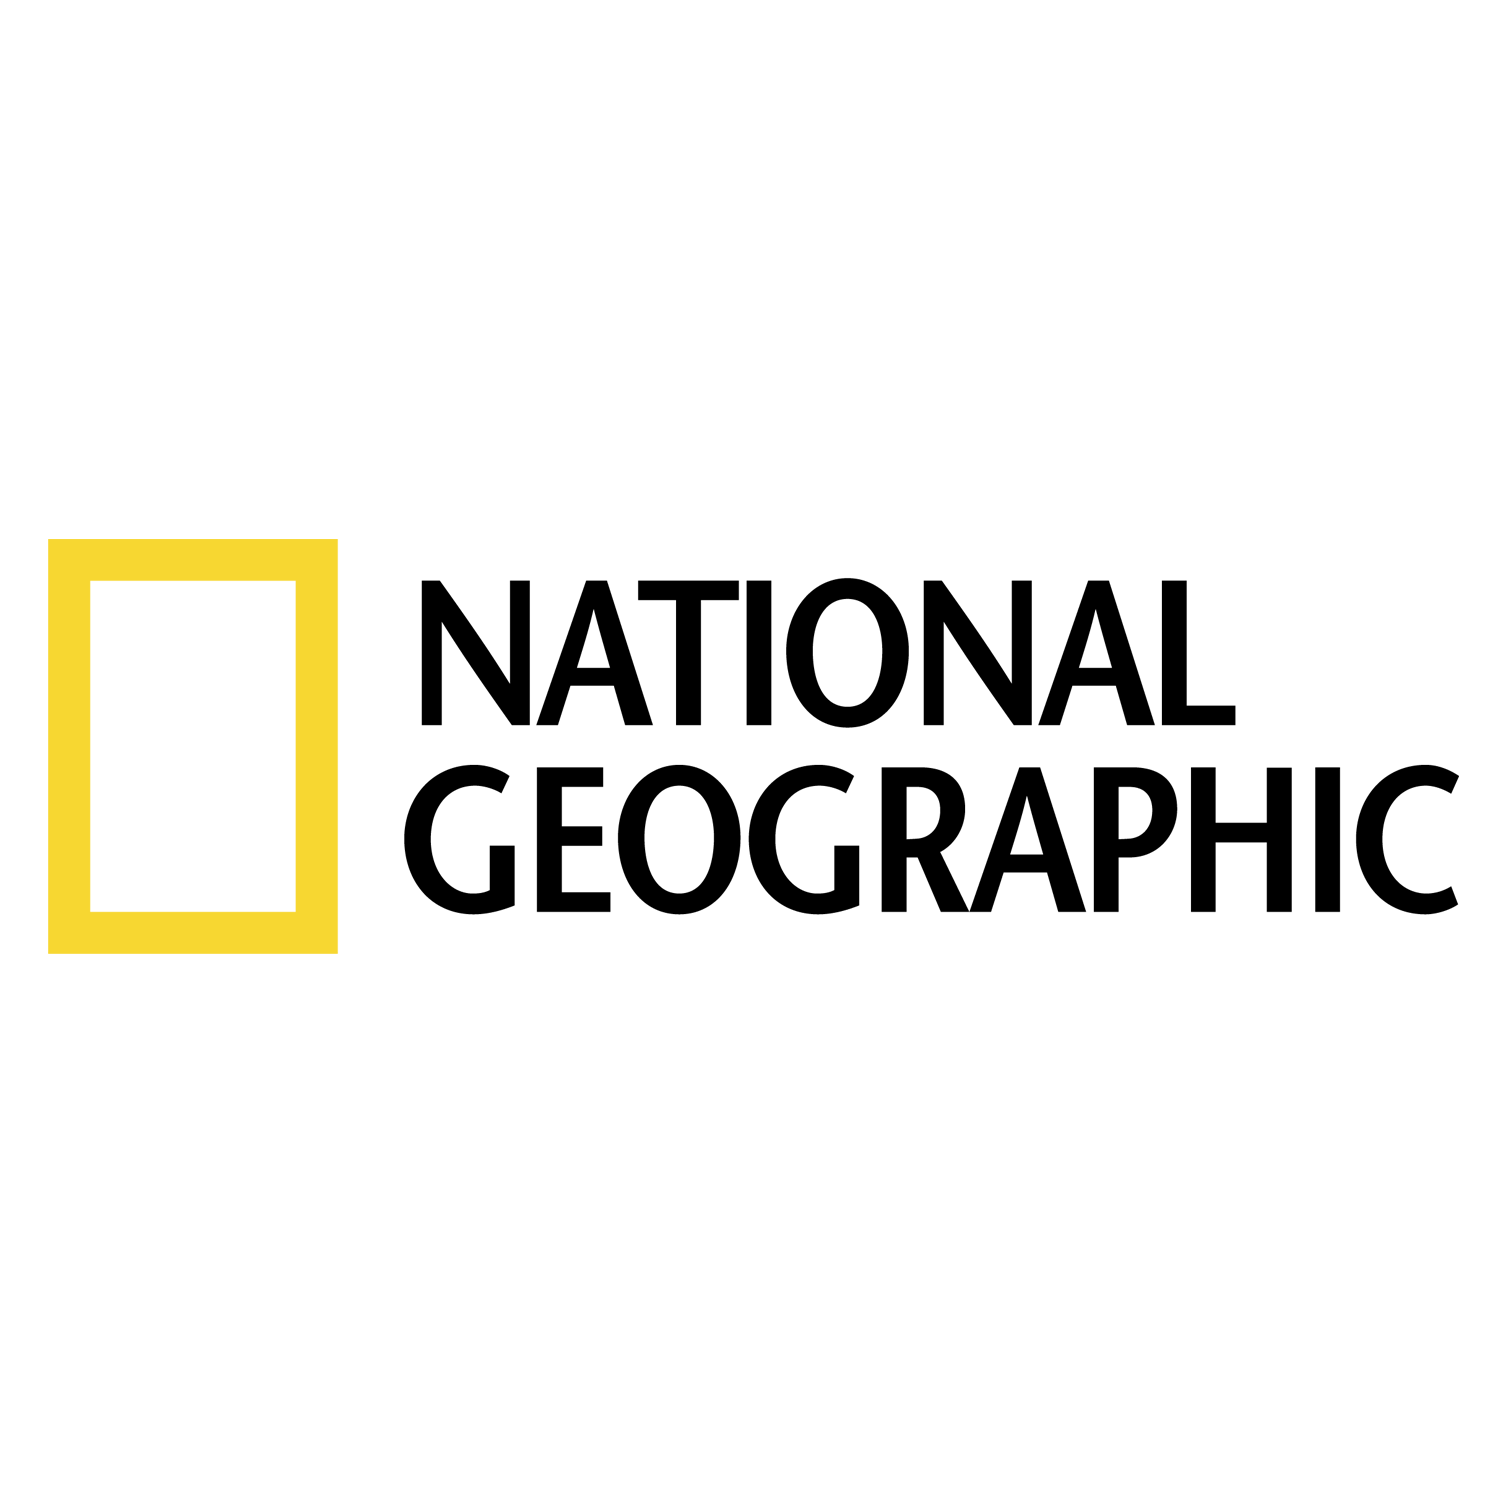 National Geographic Society logo